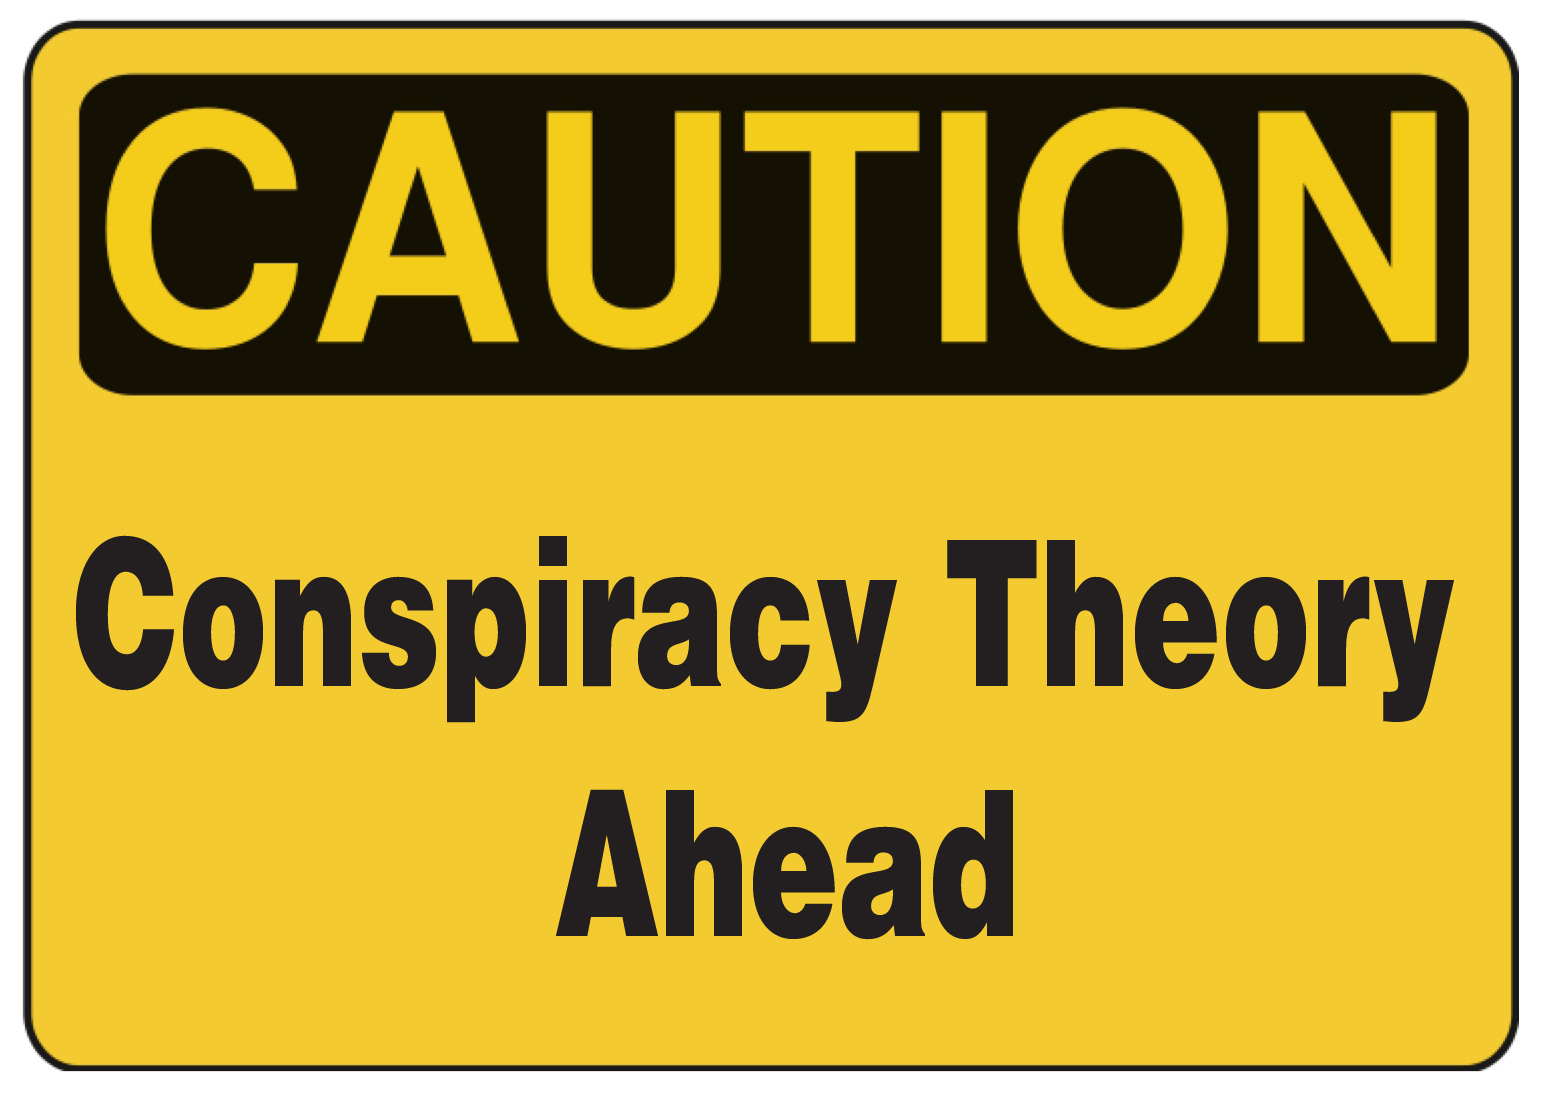 conspiracy-theory-caution_0.jpg